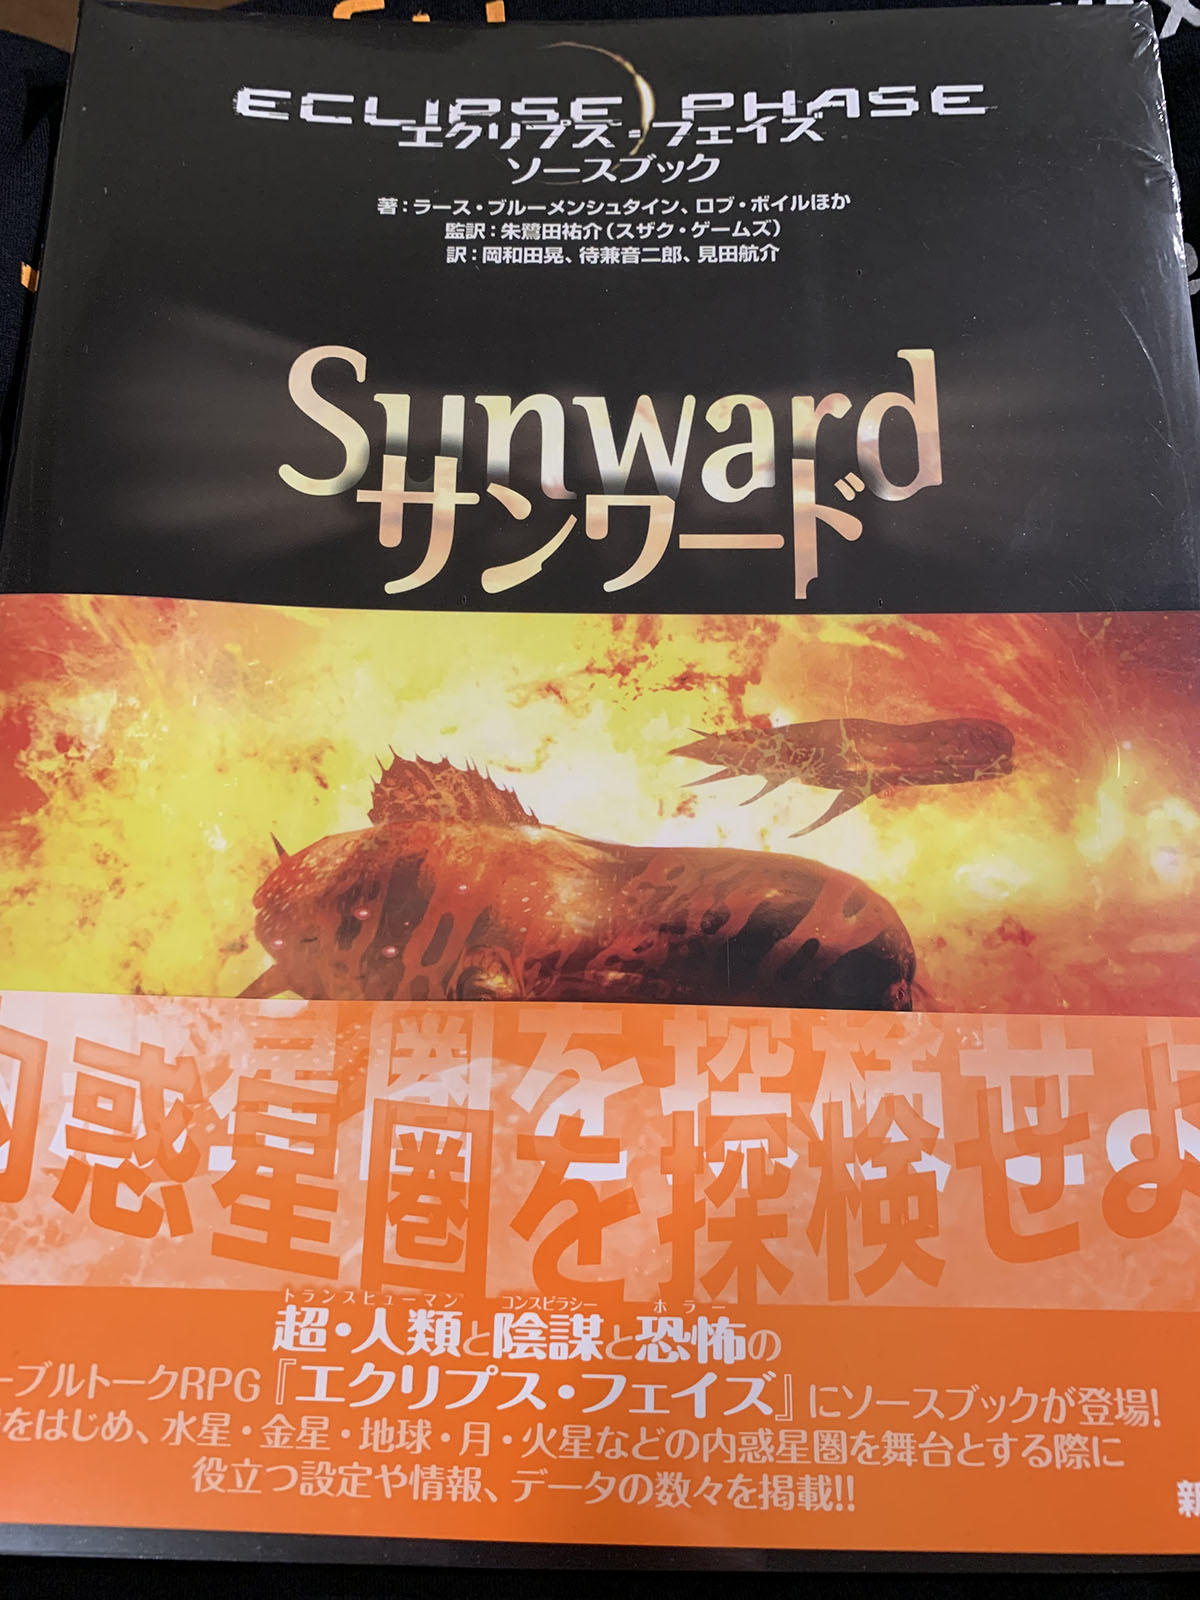 Sunward — Japanese (Arclight)